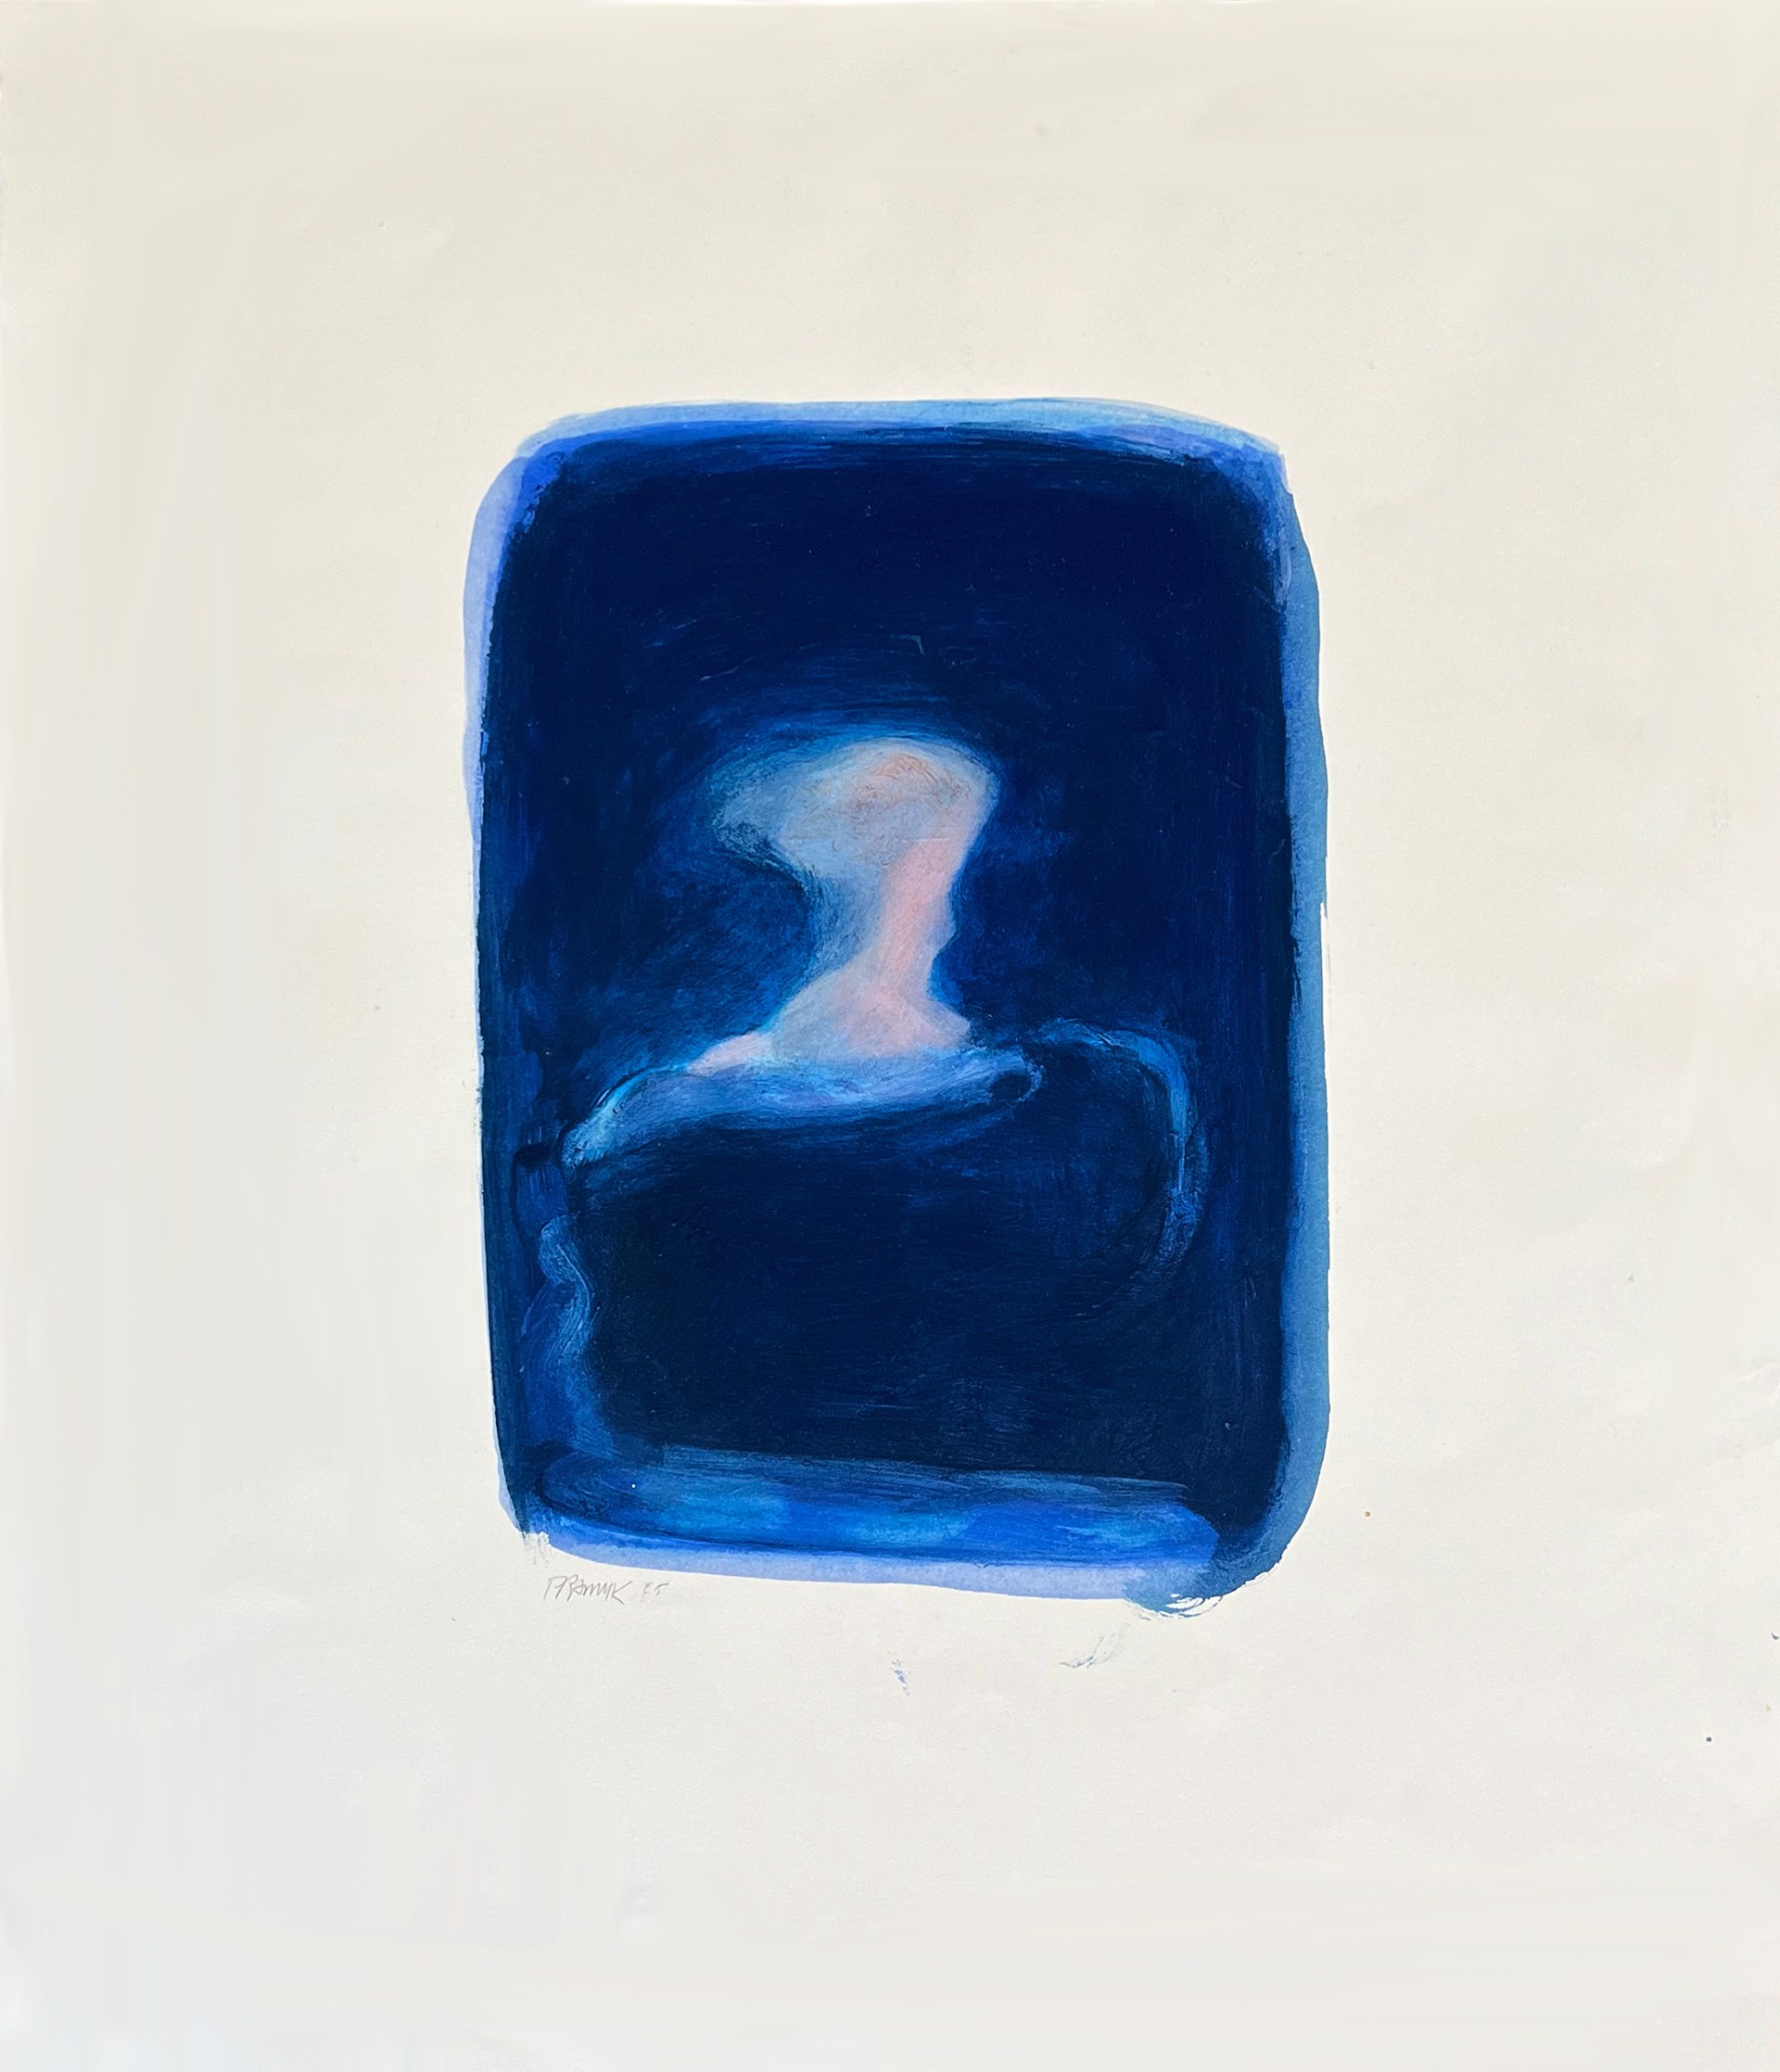 Deep In A Dream of Blue by Edward Pramuk